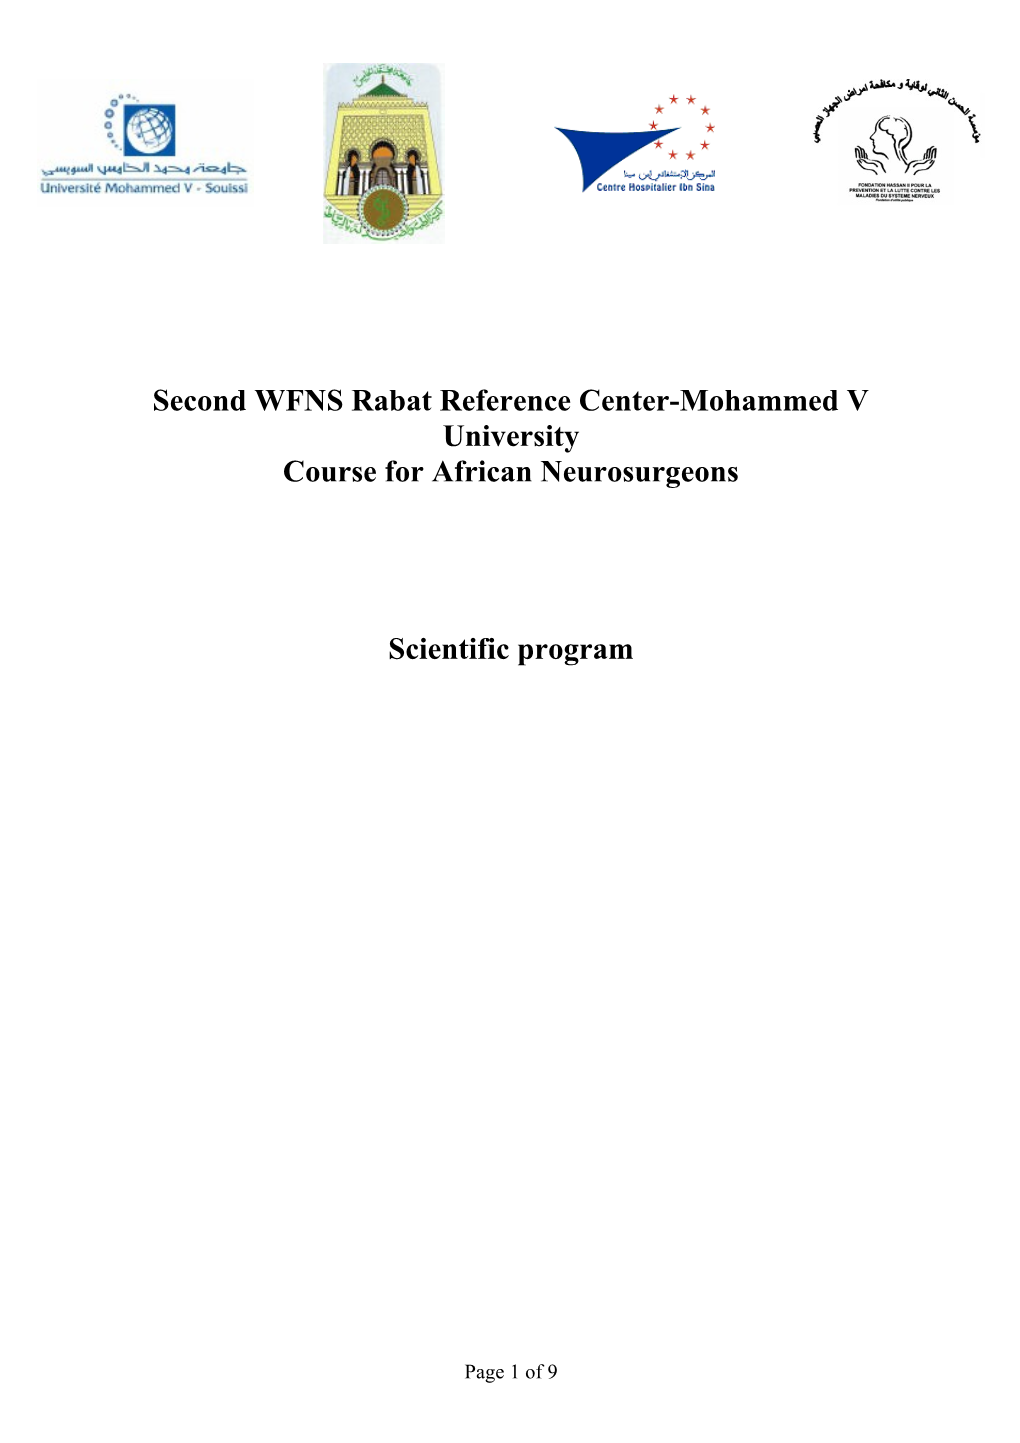 Second WFNS Rabat Reference Center-Mohammed V University